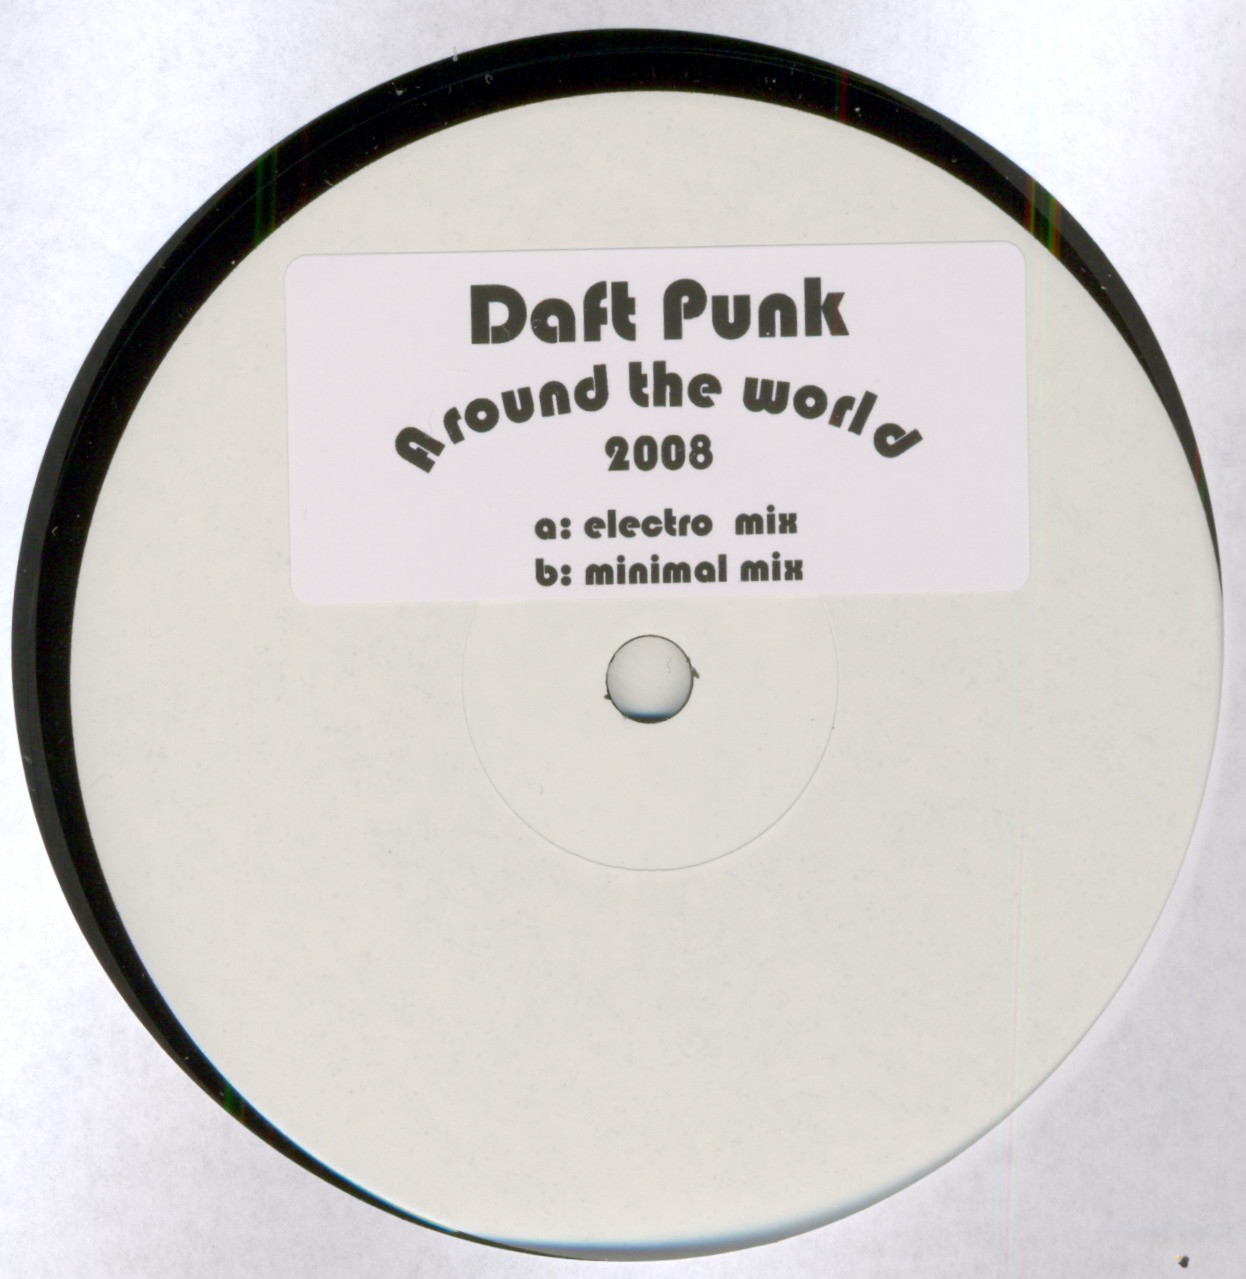 Daft punk around the world 2008  electro mix